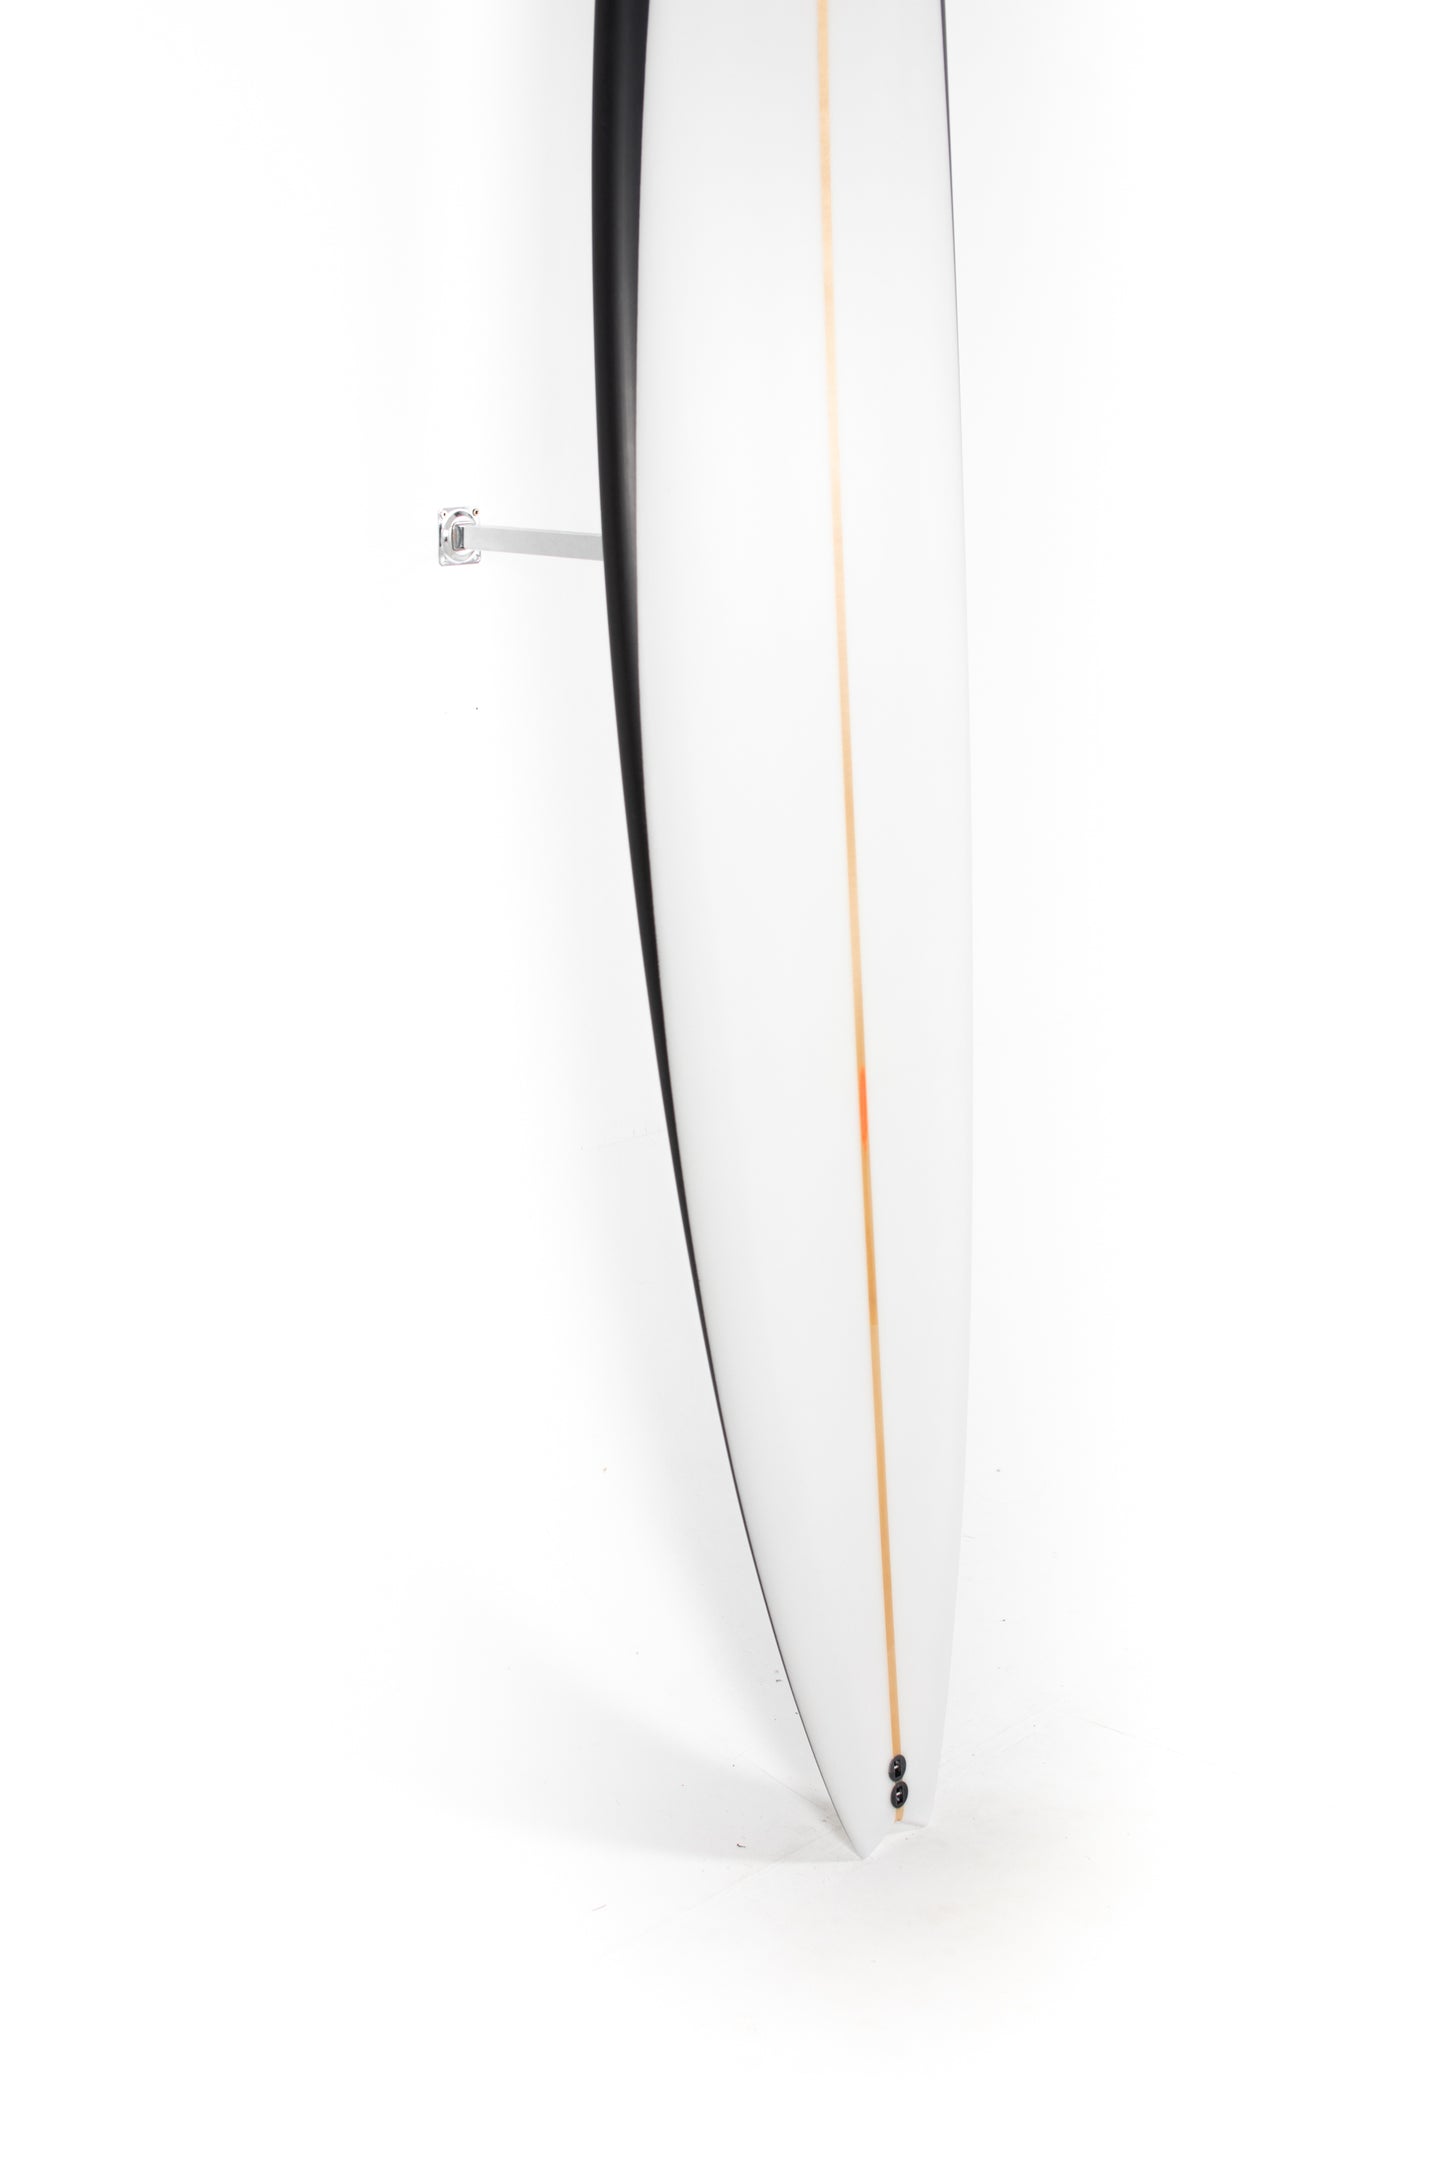 Christenson Surfboards - SICARIO - 8'6